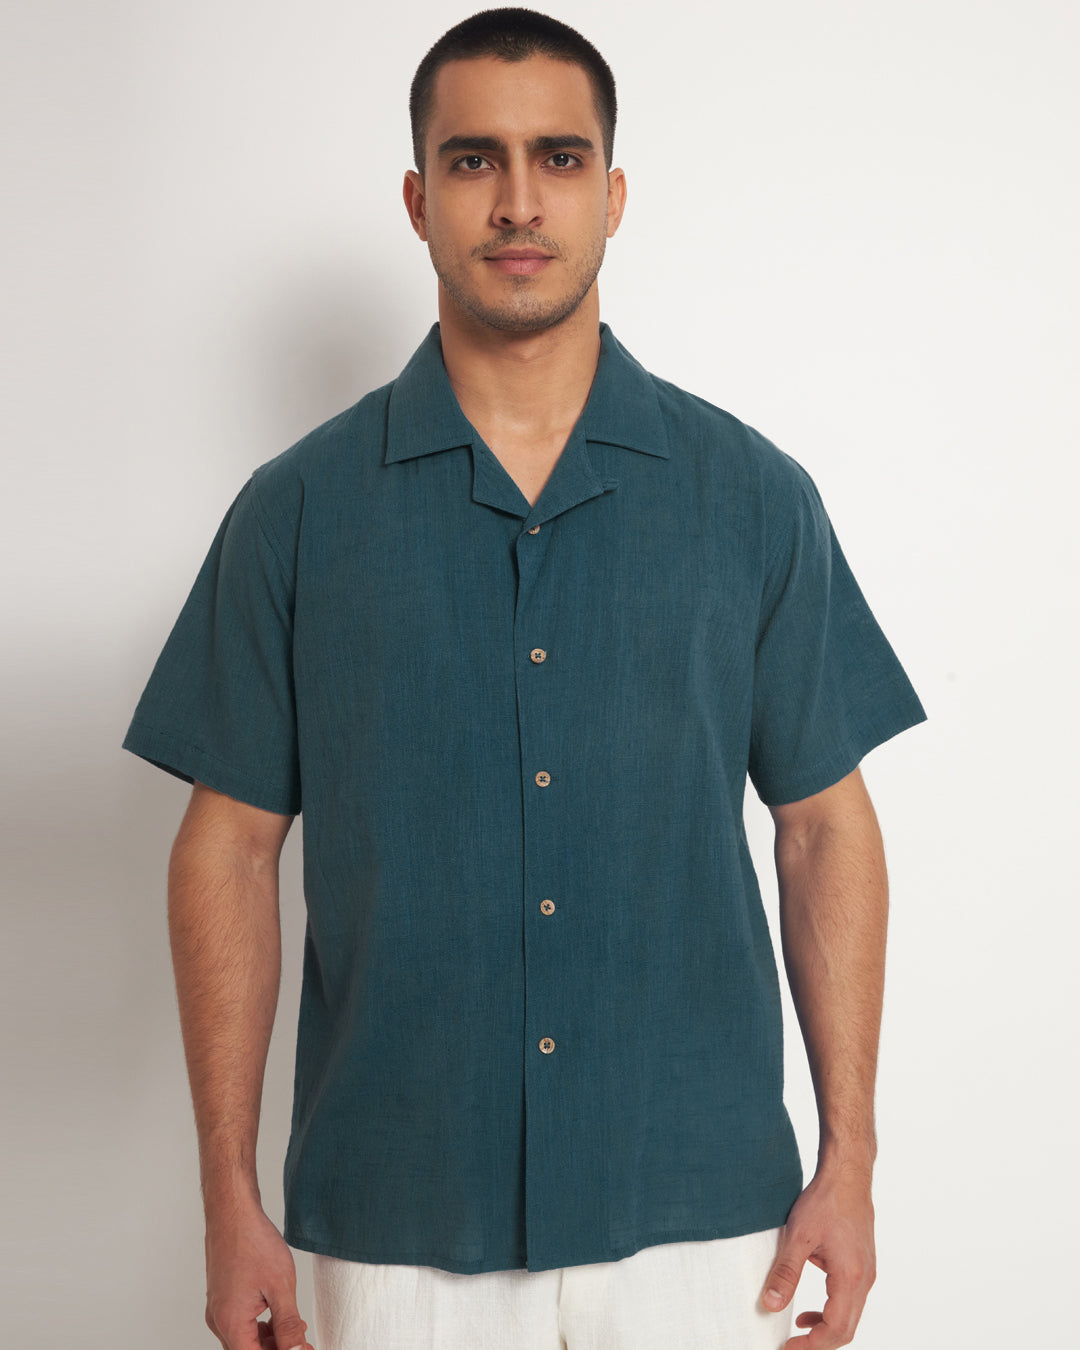 Combo: Classic Deep Teal Half Sleeves Men's Shirt & Pants